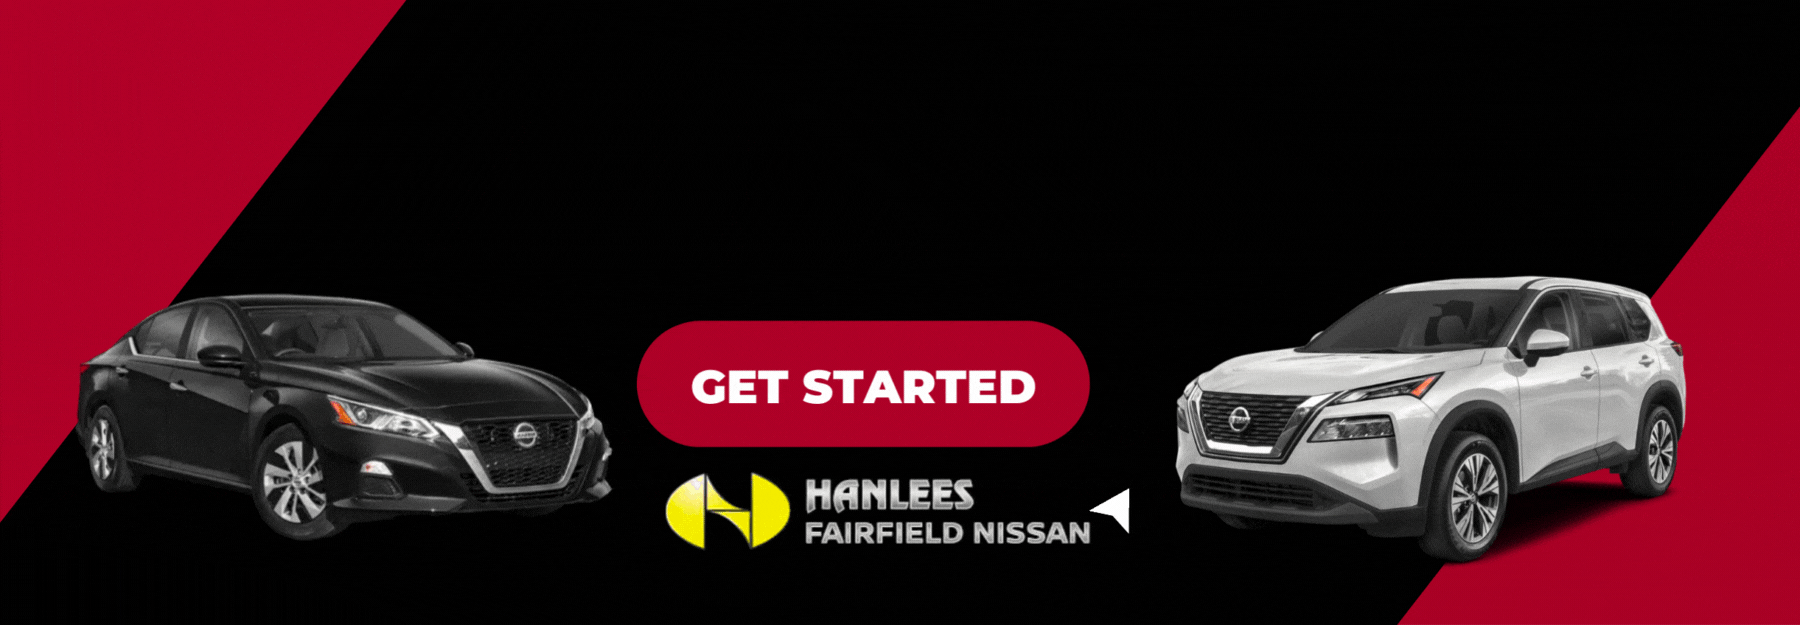 Hanlees Fairfield Nissan Banner Trade